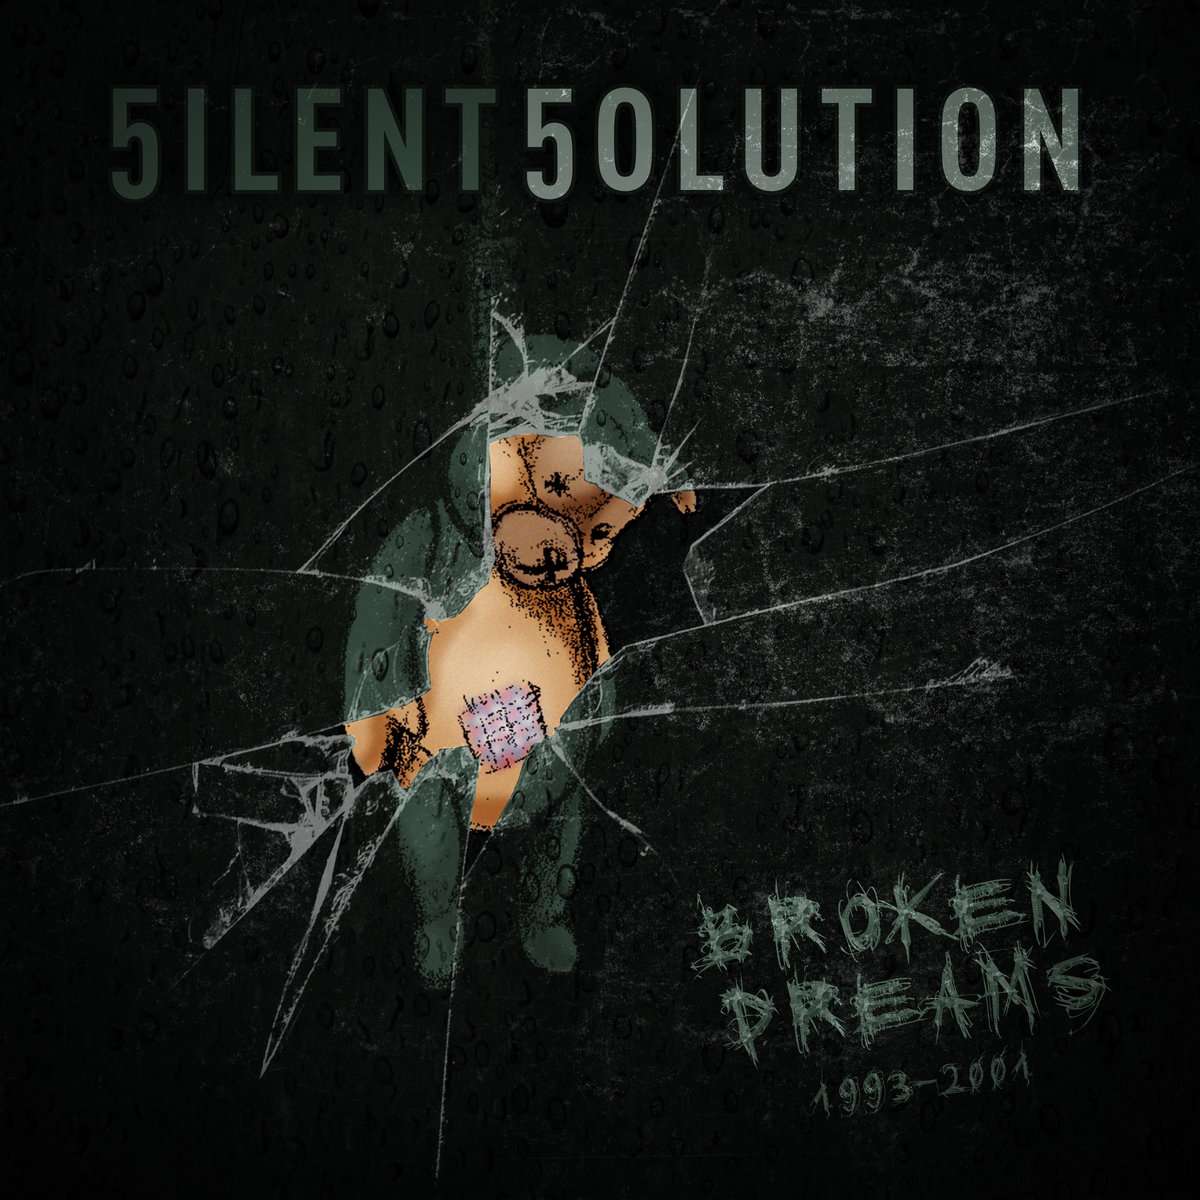 5ilent 5olution - Broken Dreams...